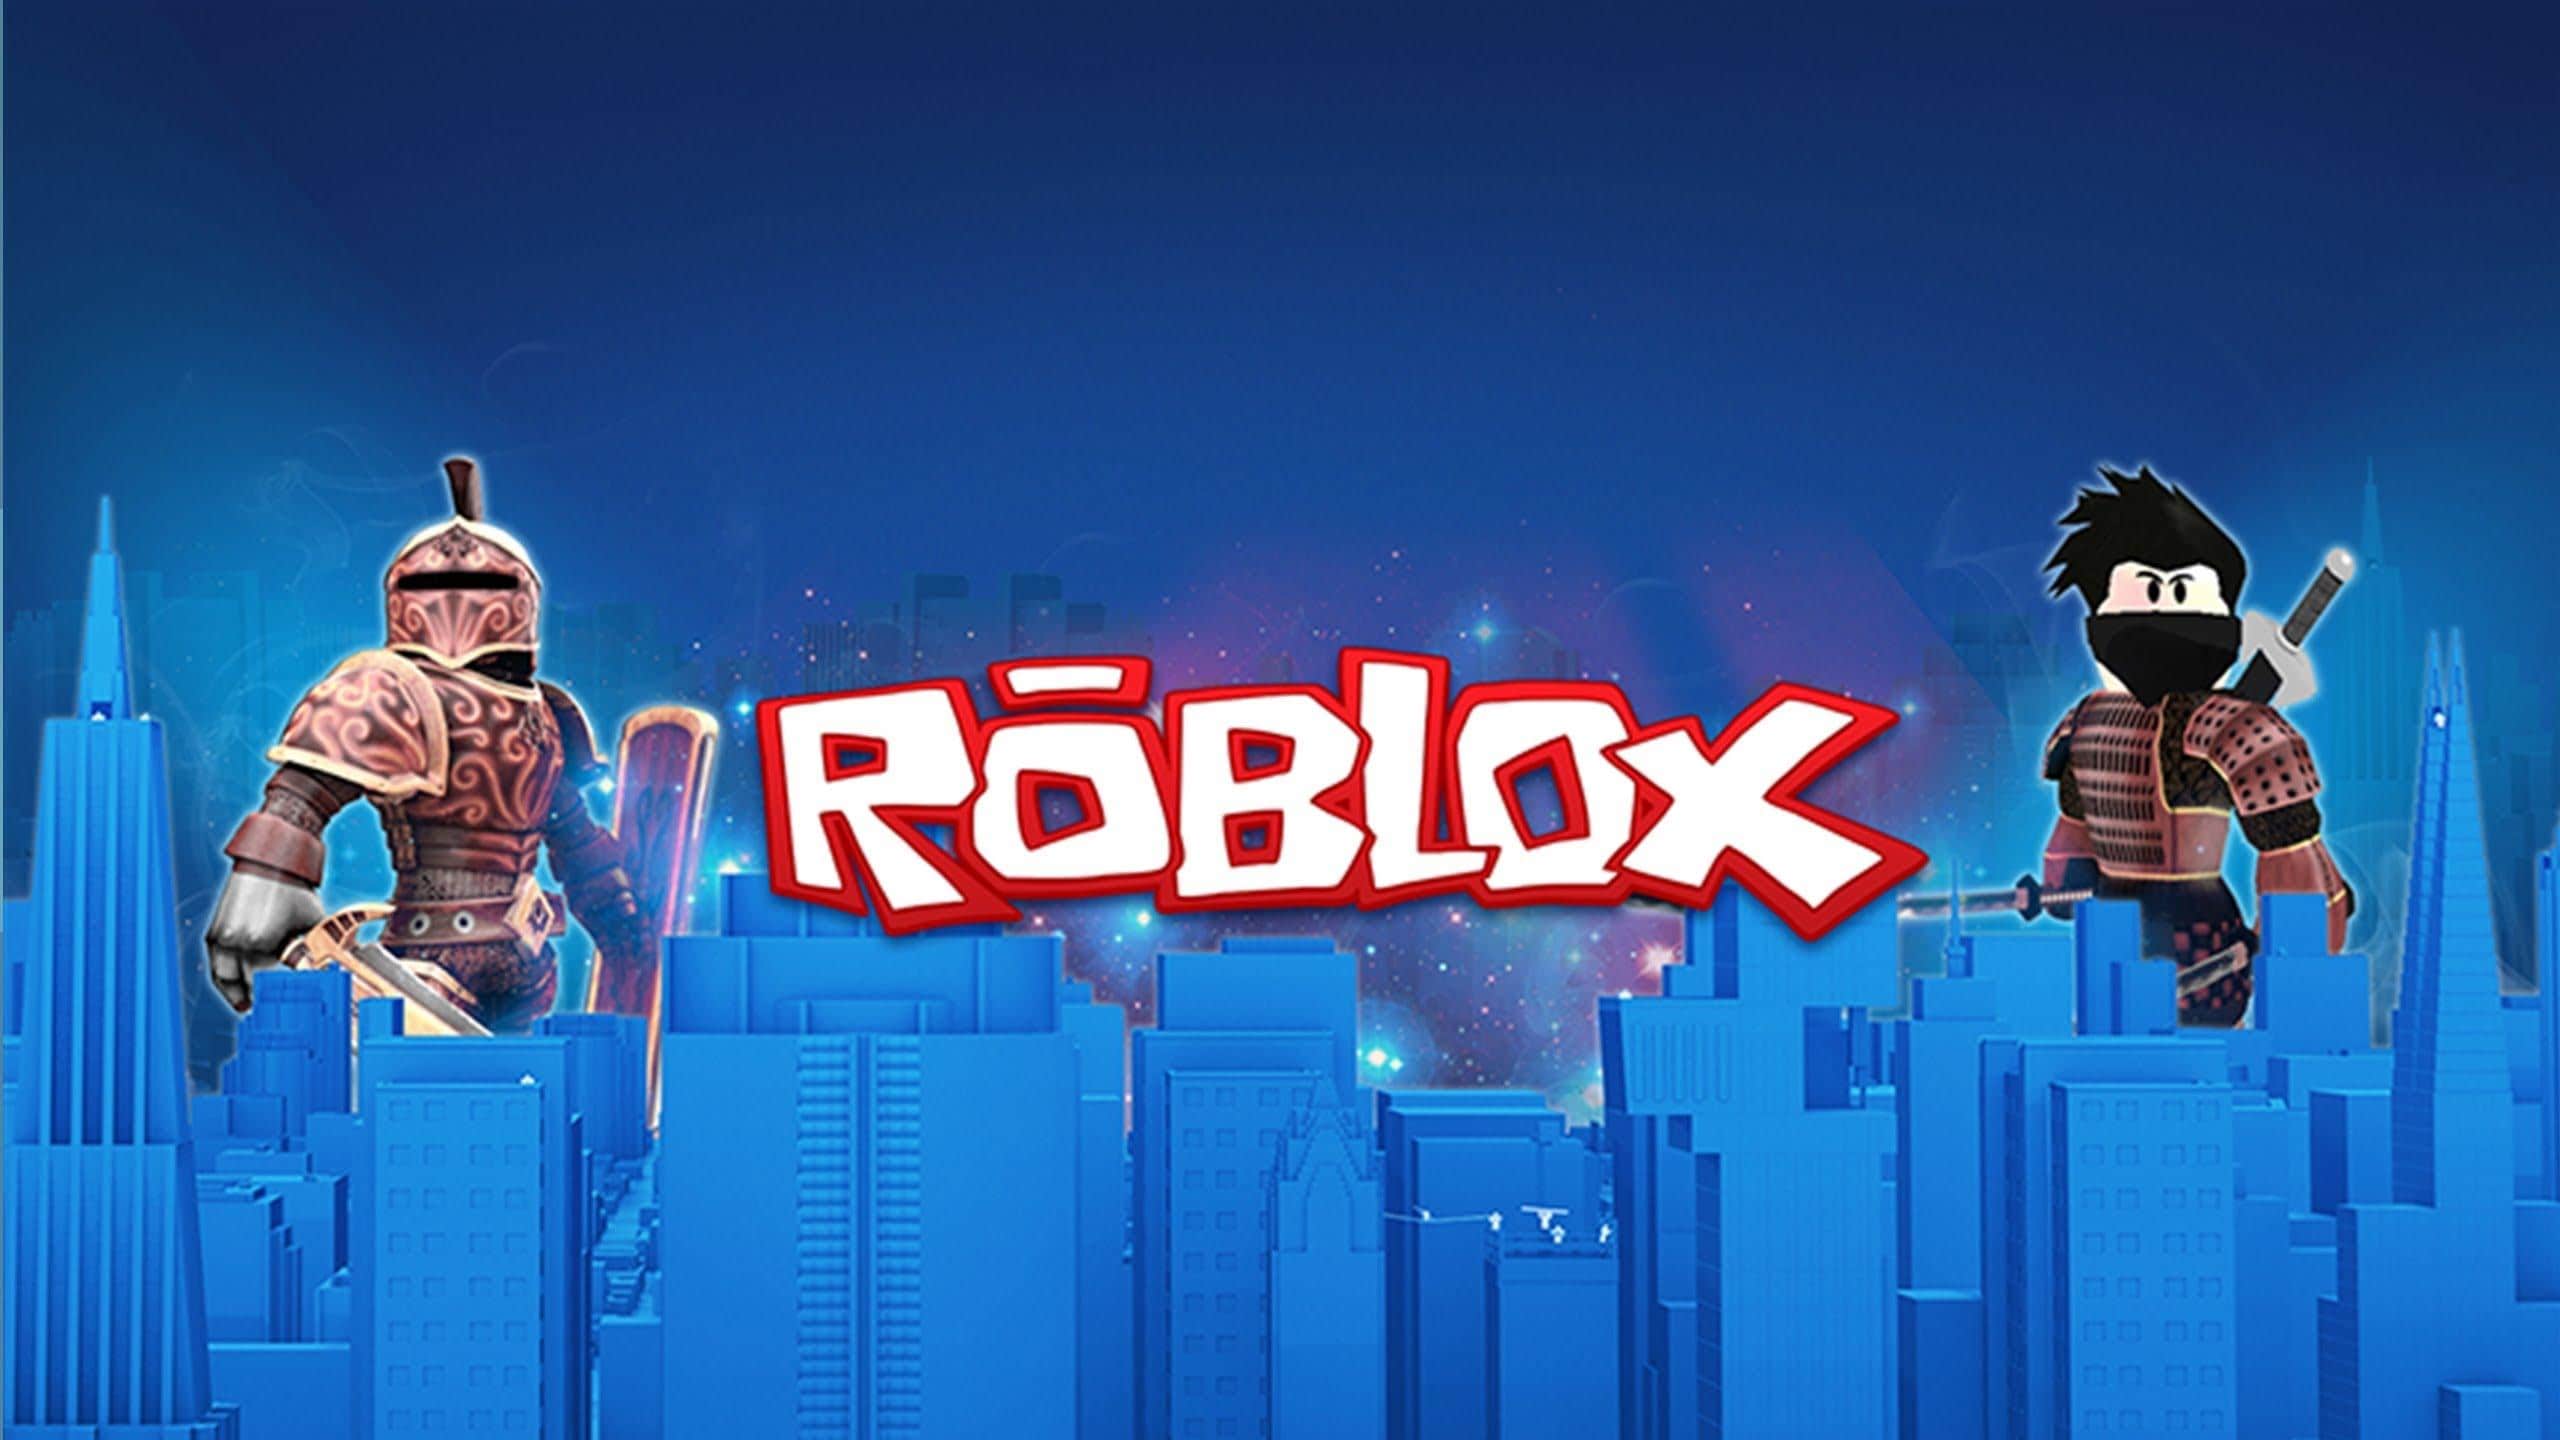 Roblox Hd Wallpaper Roblox Logo 12125 Hd Wallpaper Backgrounds Download - roblox logo desktop